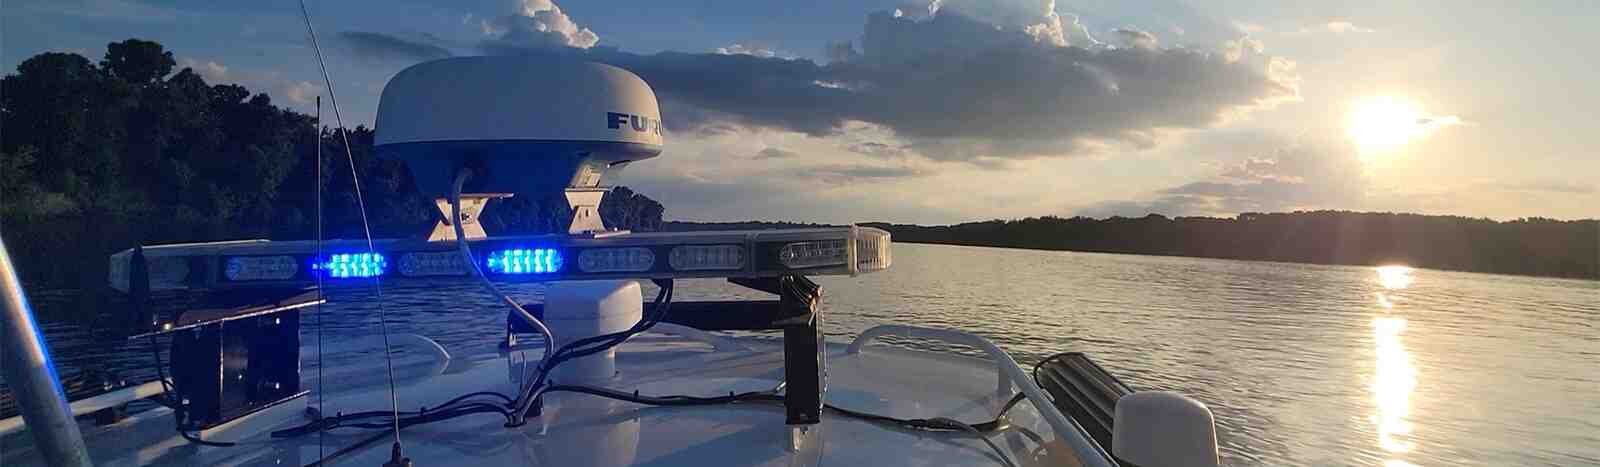 Morgan County police boat on a lake.